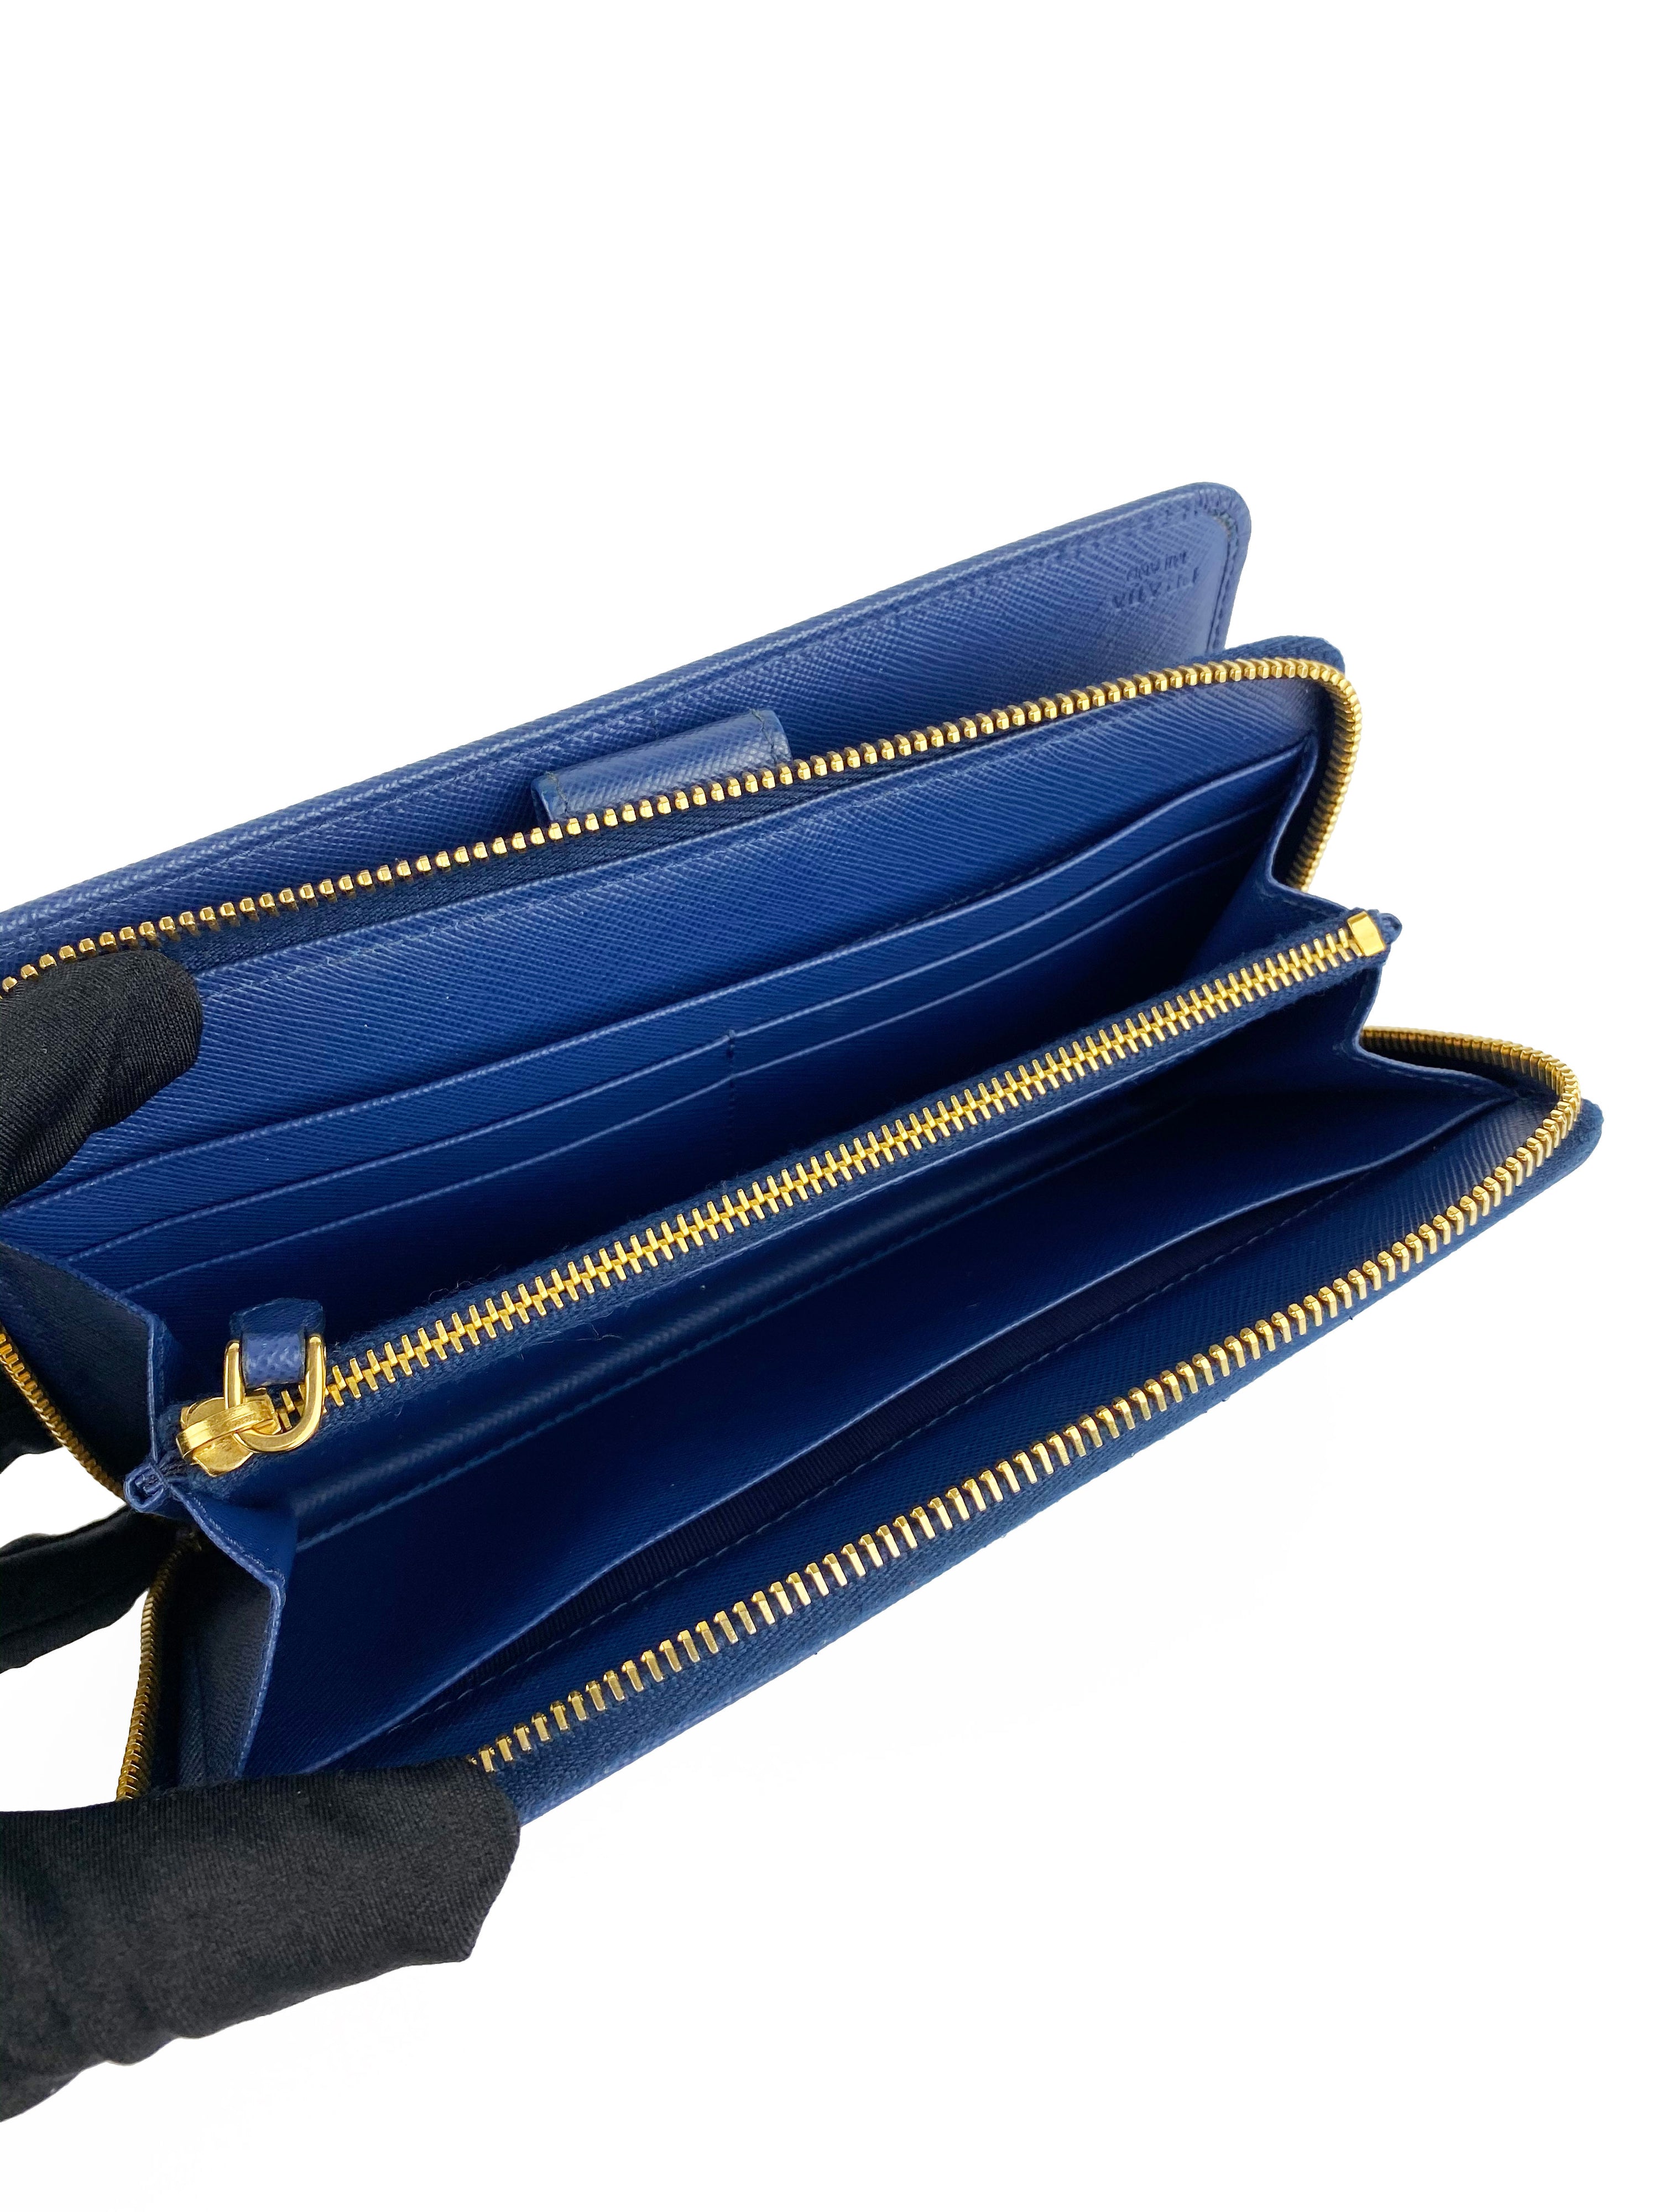 Prada Navy Blue Saffiano Zipped Wallet